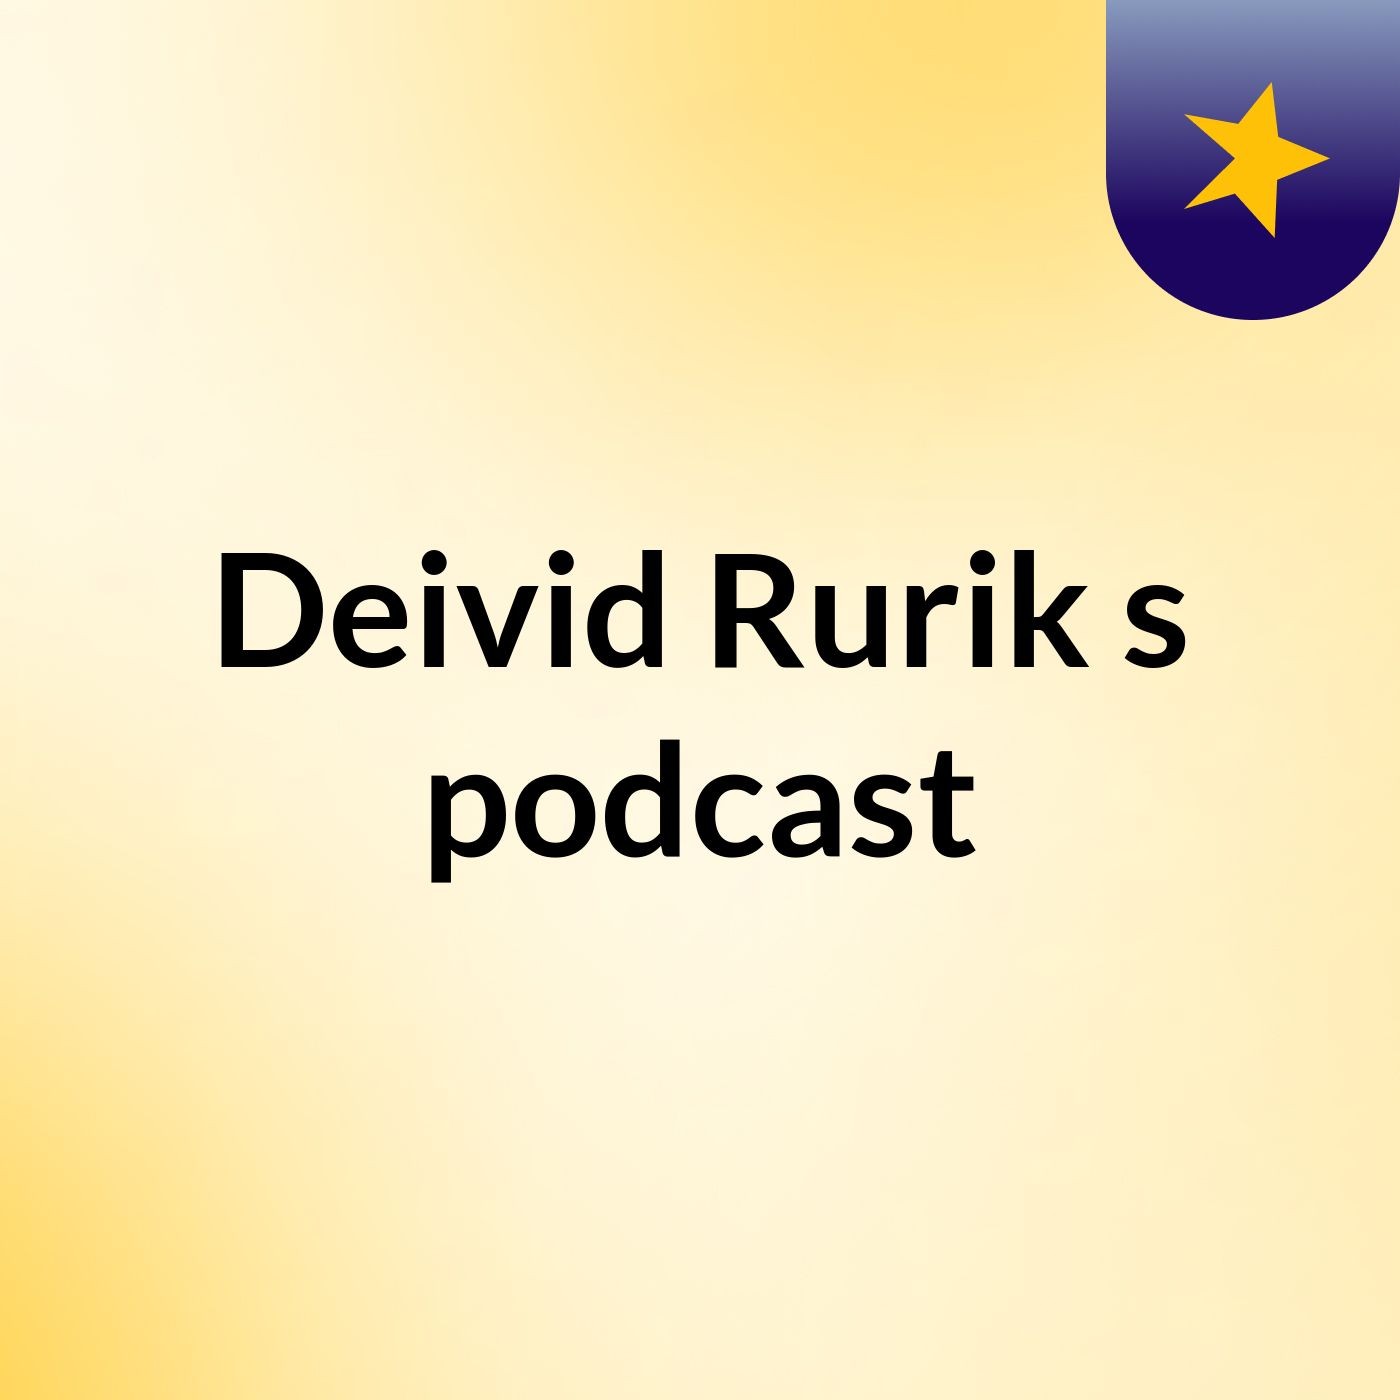 Deivid Rurik's podcast